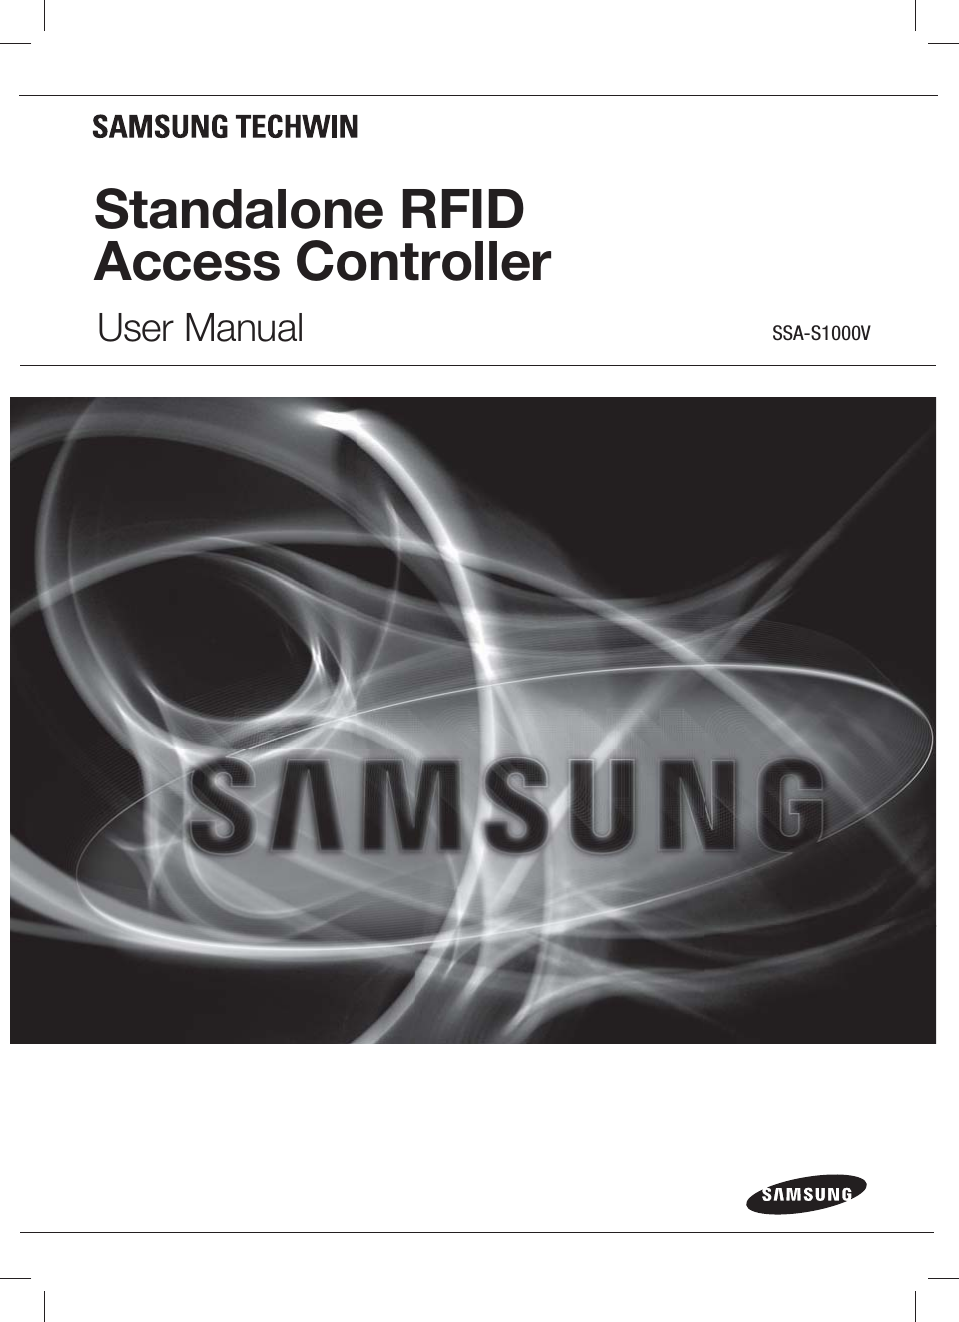 Standalone RFID Access ControllerUser Manual SSA-S1000V